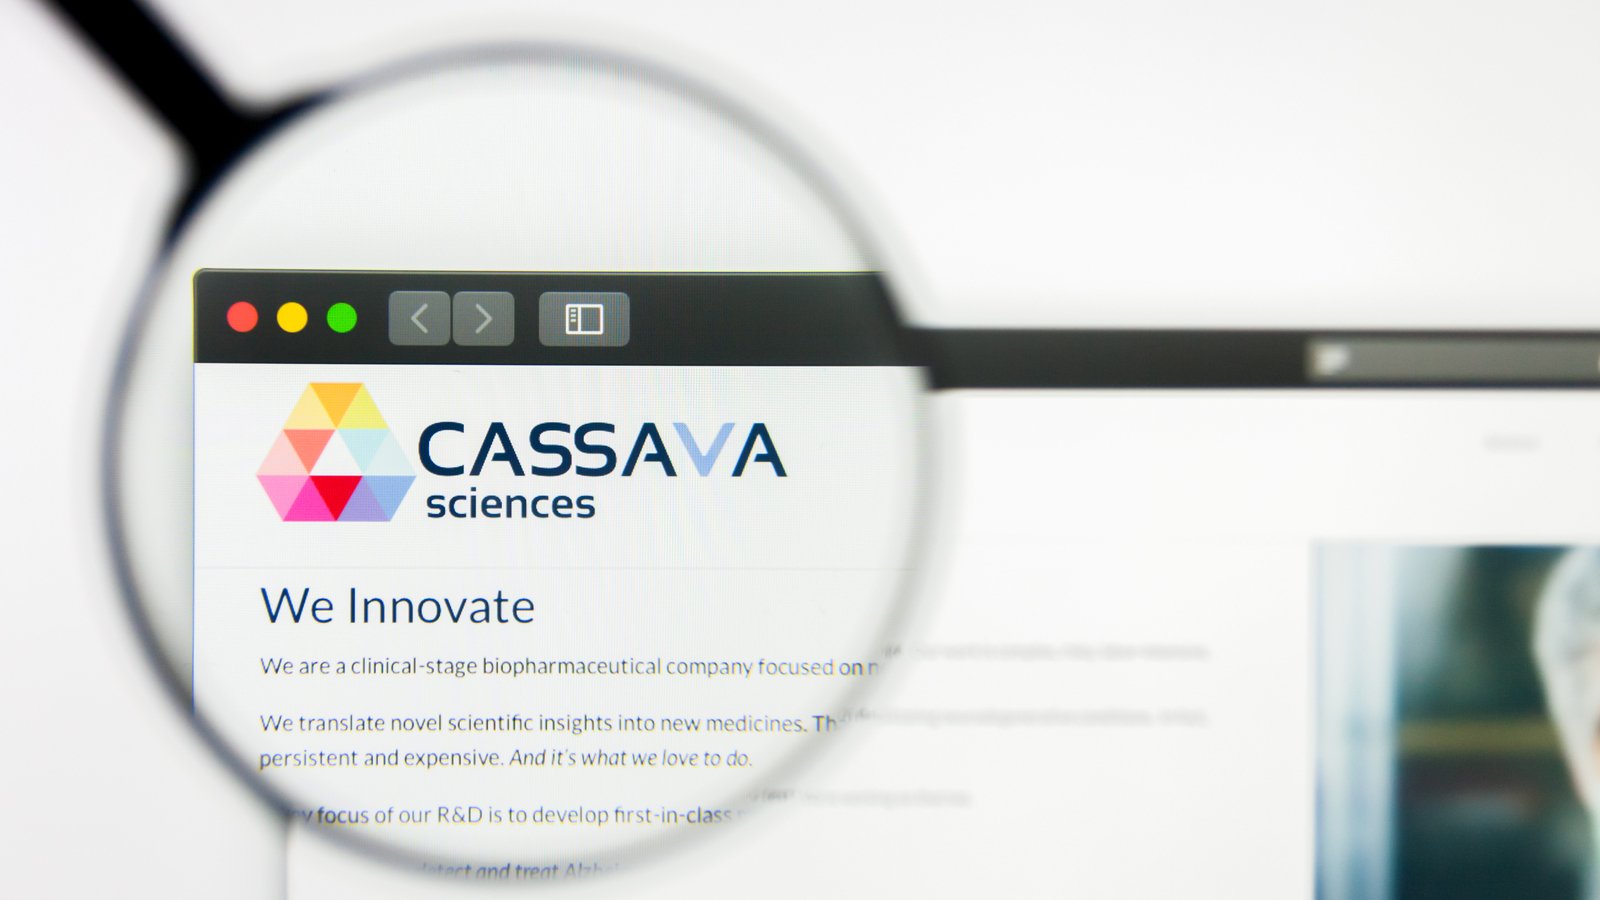 Cassava Sciences (SAVA) Inc logo visible on display screen